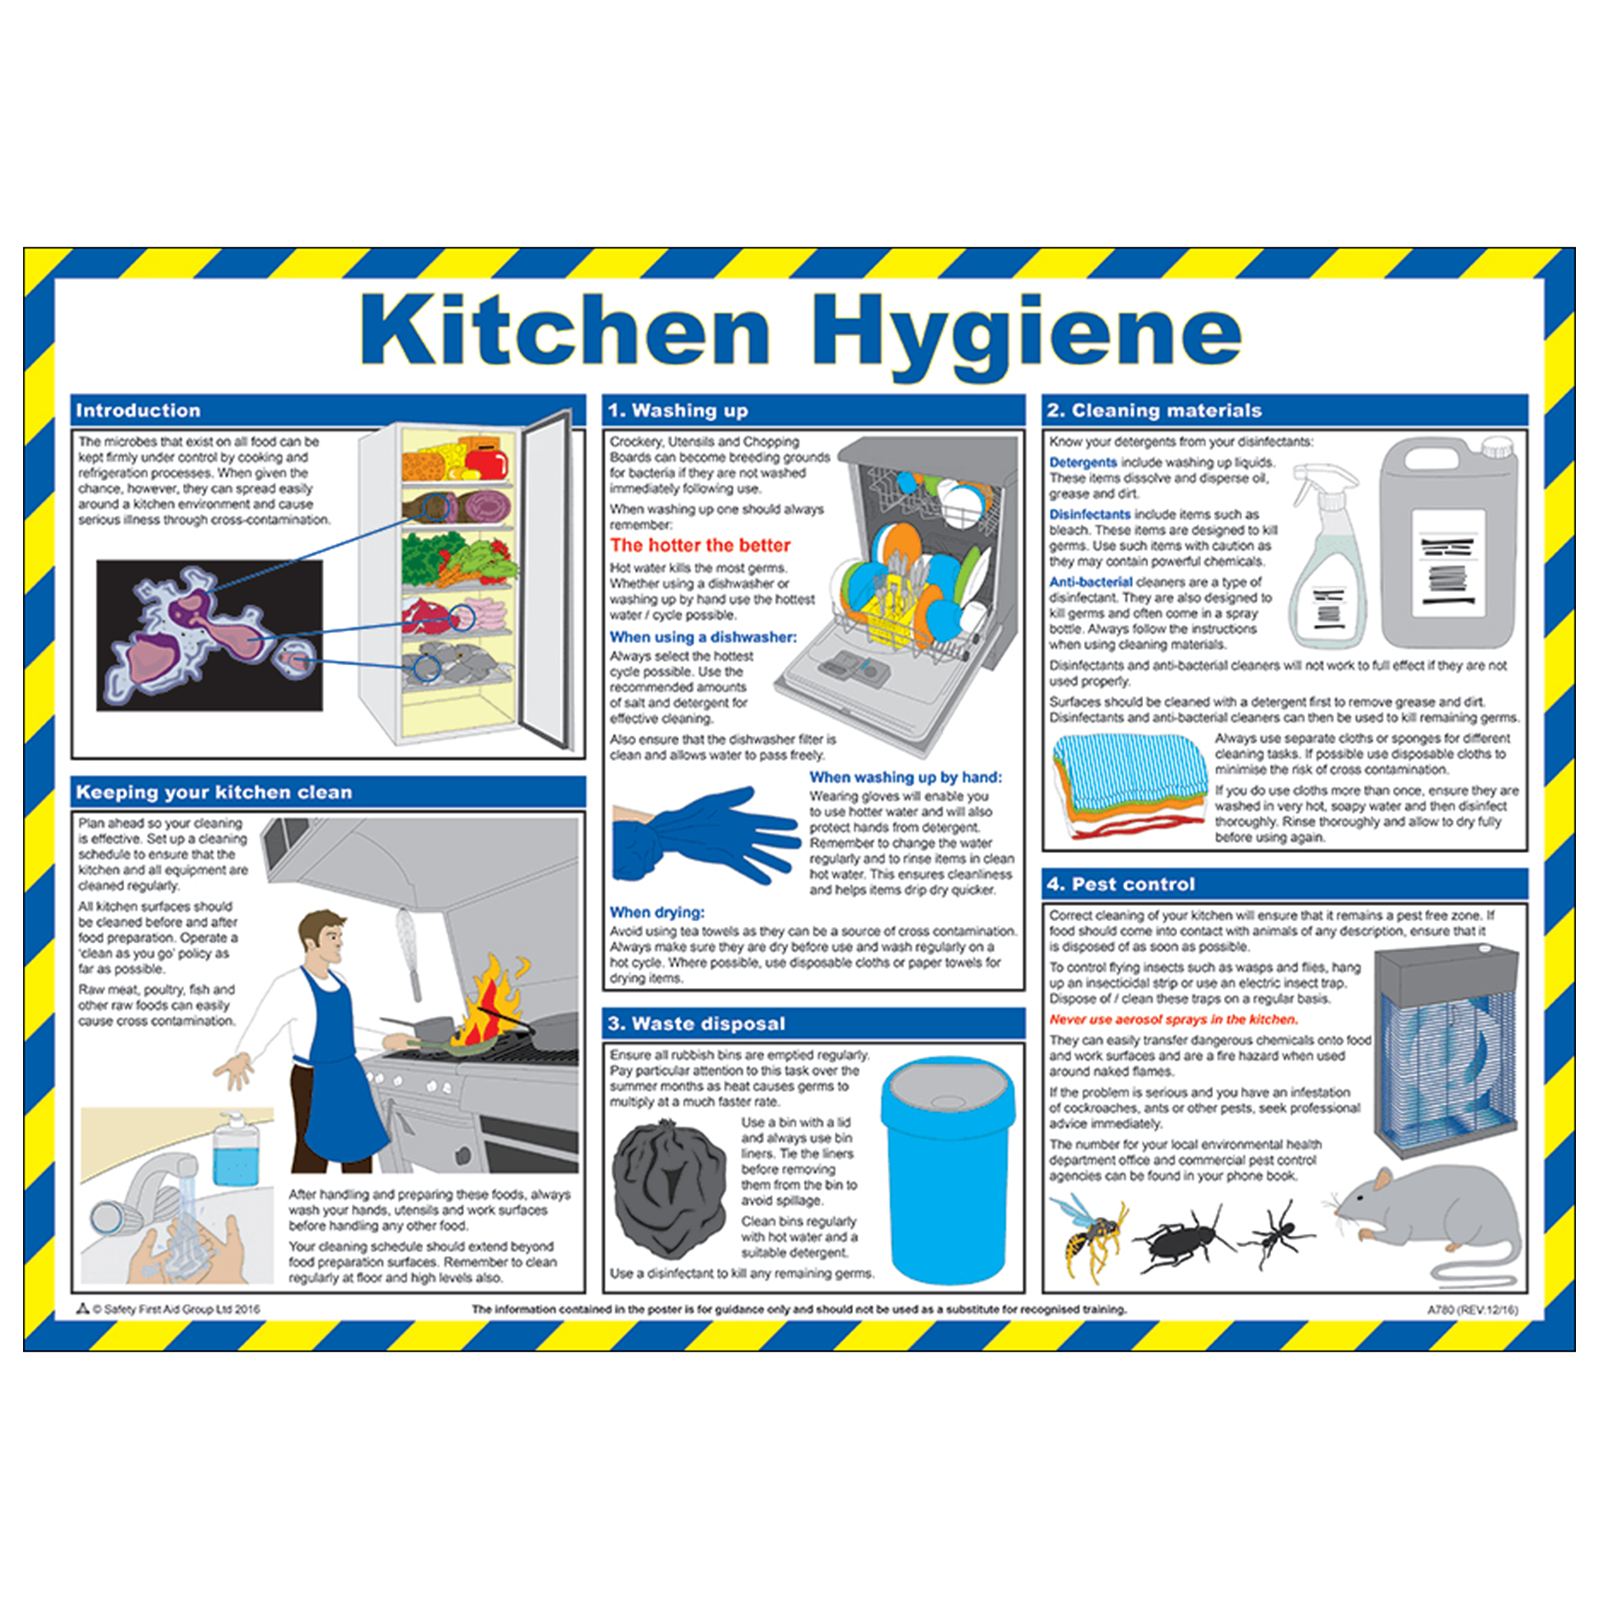 personal hygiene in the kitchen essay